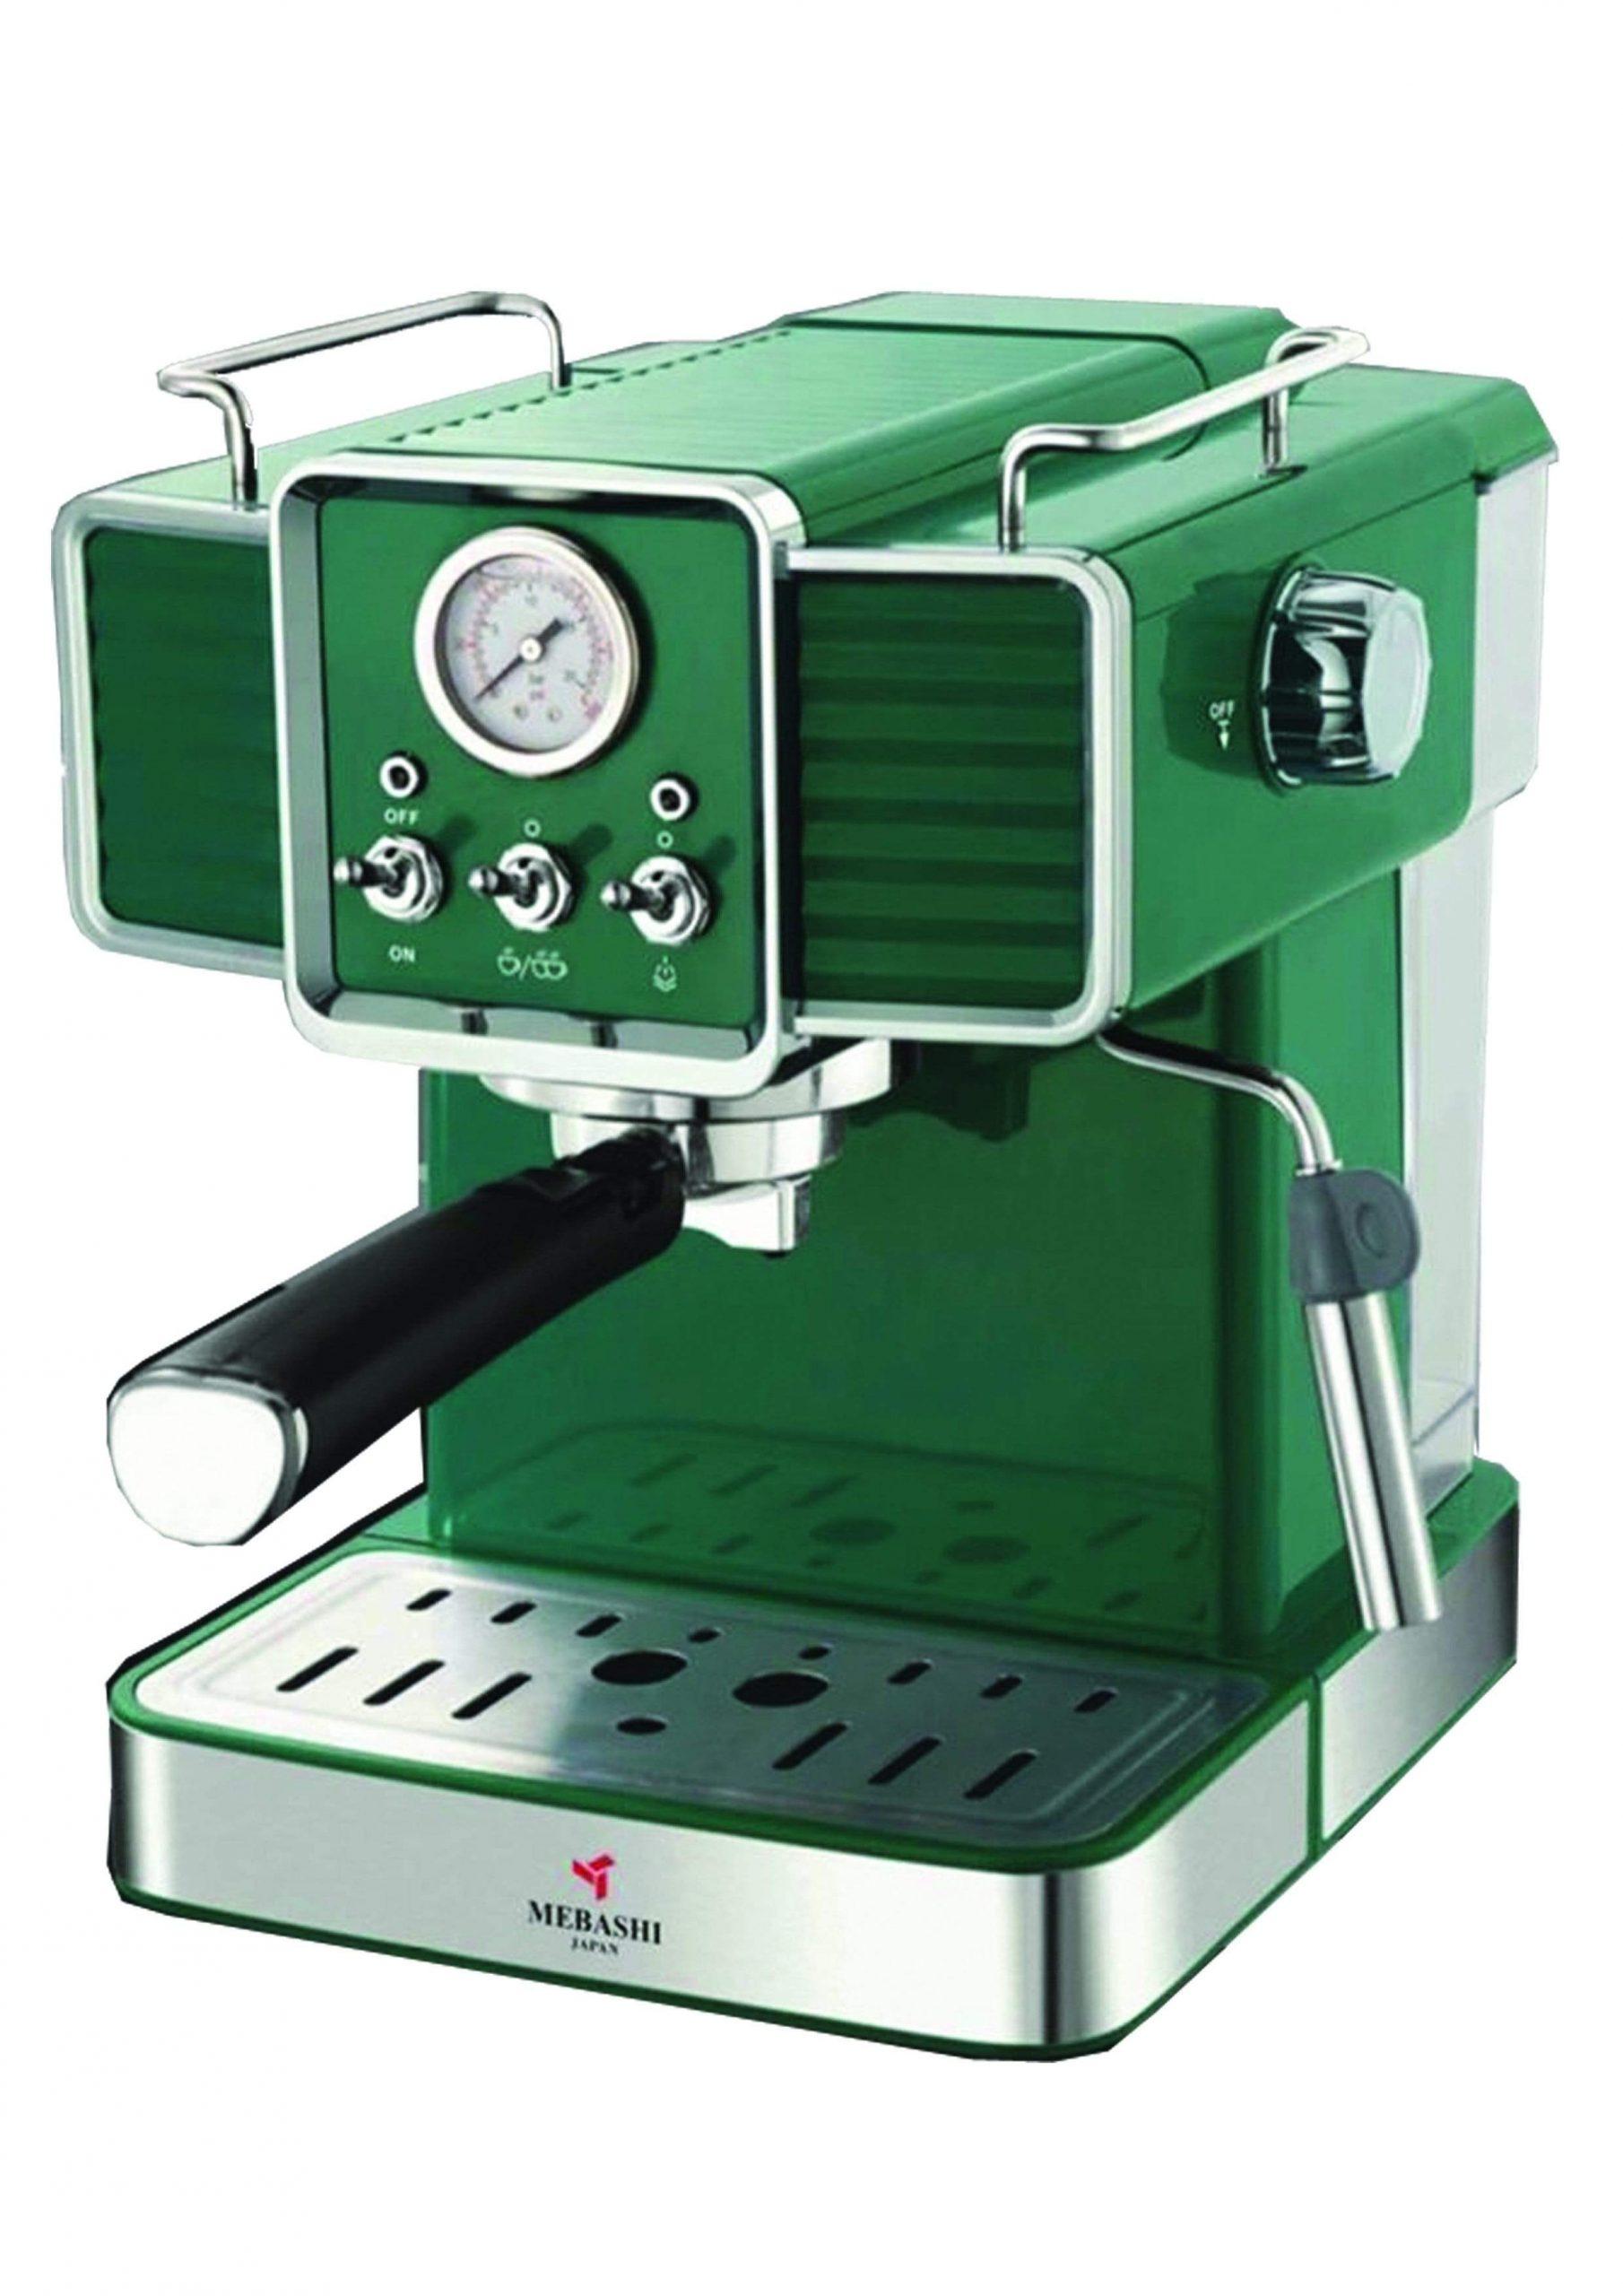 mebashi espresso coffee machine me ecm2020 green